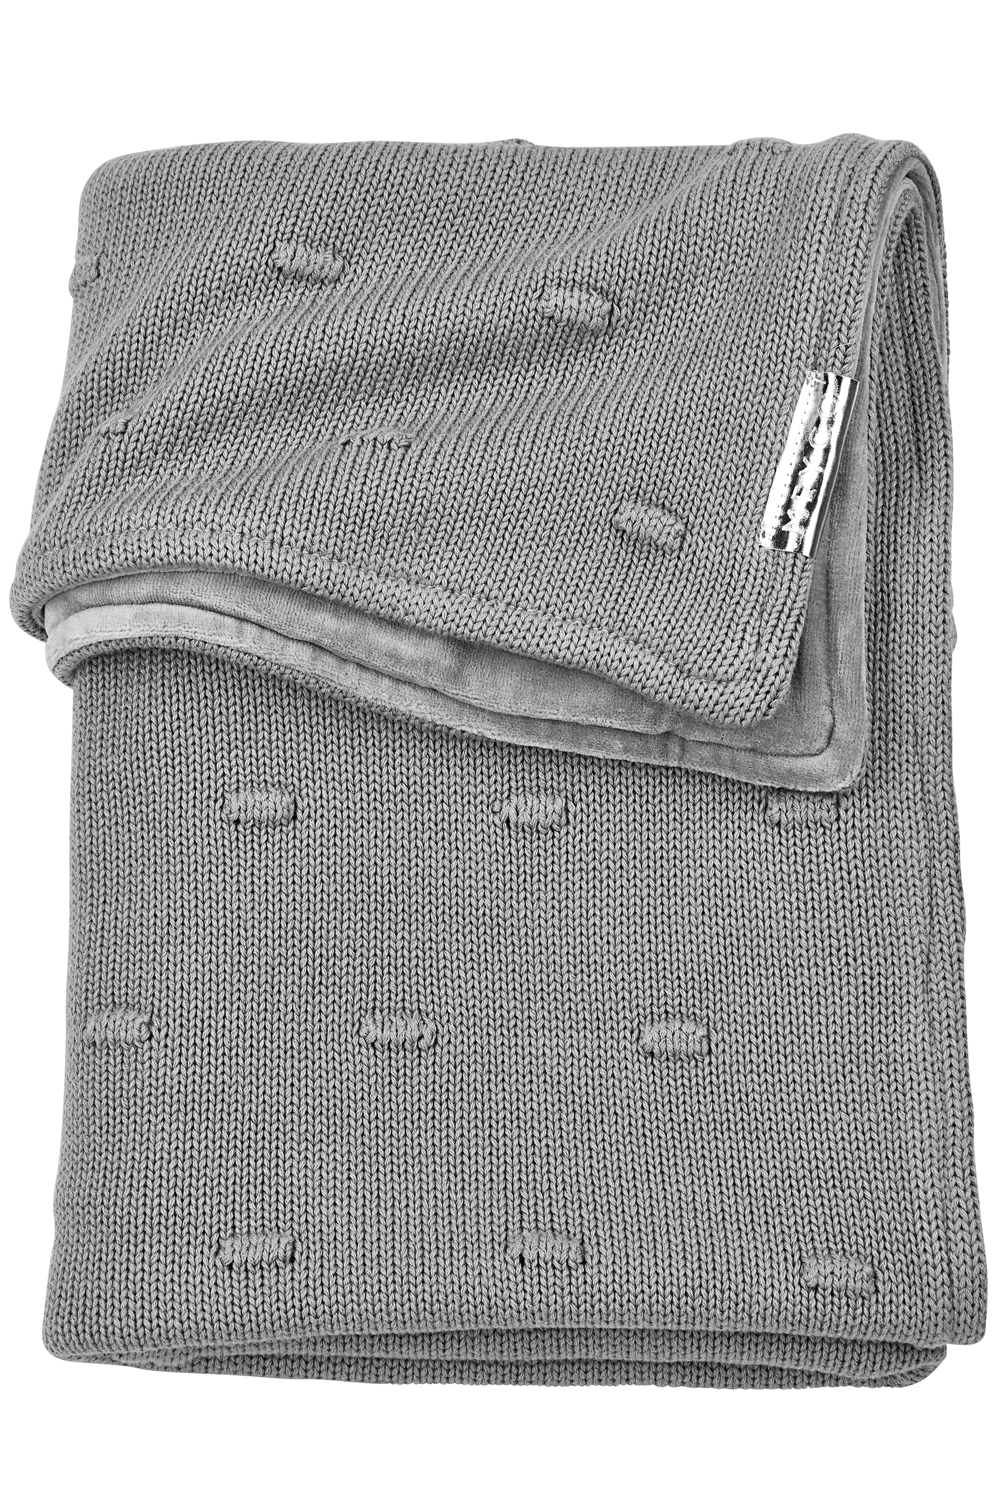 Crib bed blanket Knots velvet - grey - 75x100cm